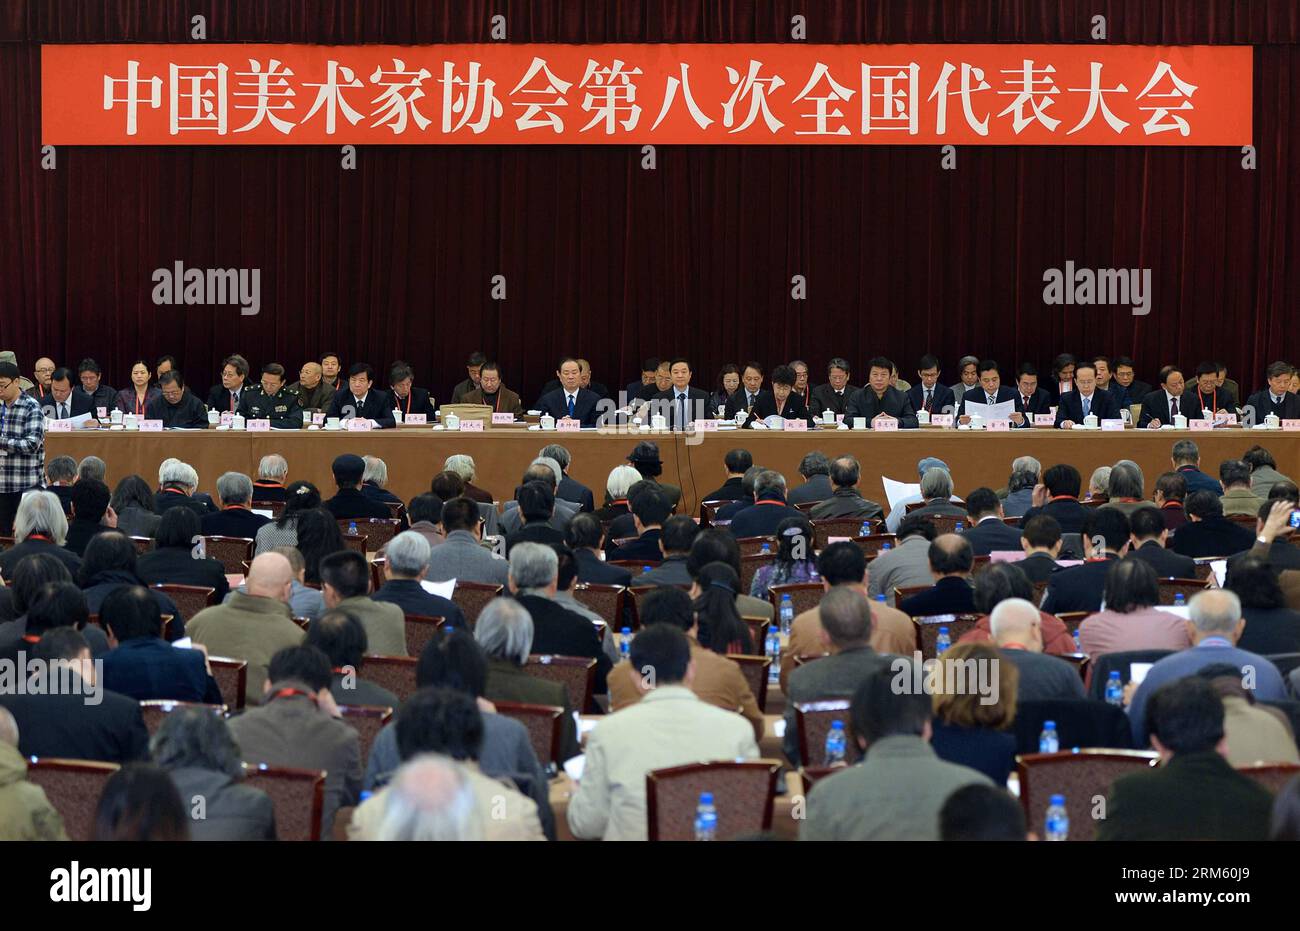 Bildnummer: 60753384  Datum: 25.11.2013  Copyright: imago/Xinhua     (131125) -- BEIJING, Nov. 25, 2013 (Xinhua) -- The 8th National Congress of the Chinese Artists Association is held in Beijing, capital of China, Nov. 25, 2013. (Xinhua/Li Tao) (mp) CHINA-BEIJING-ARTISTS ASSOCIATION-8TH NATIONAL CONGRESS (CN) PUBLICATIONxNOTxINxCHN People xcb x0x 2013 quer premiumd Stock Photo